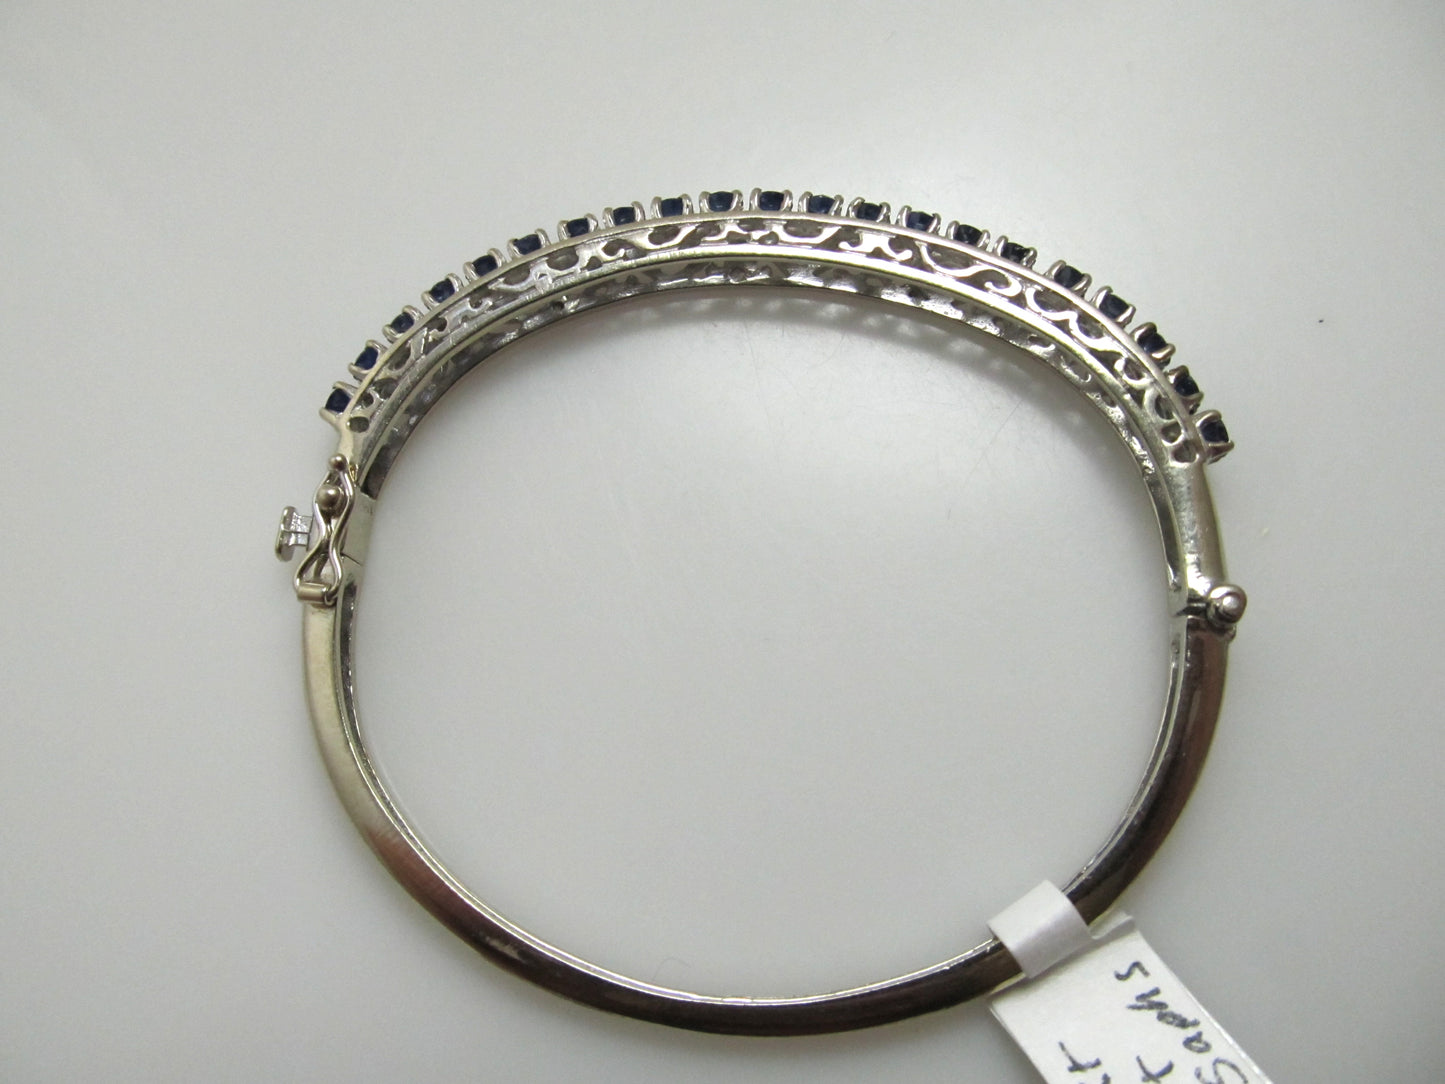 14k white gold sapphire bangle bracelet